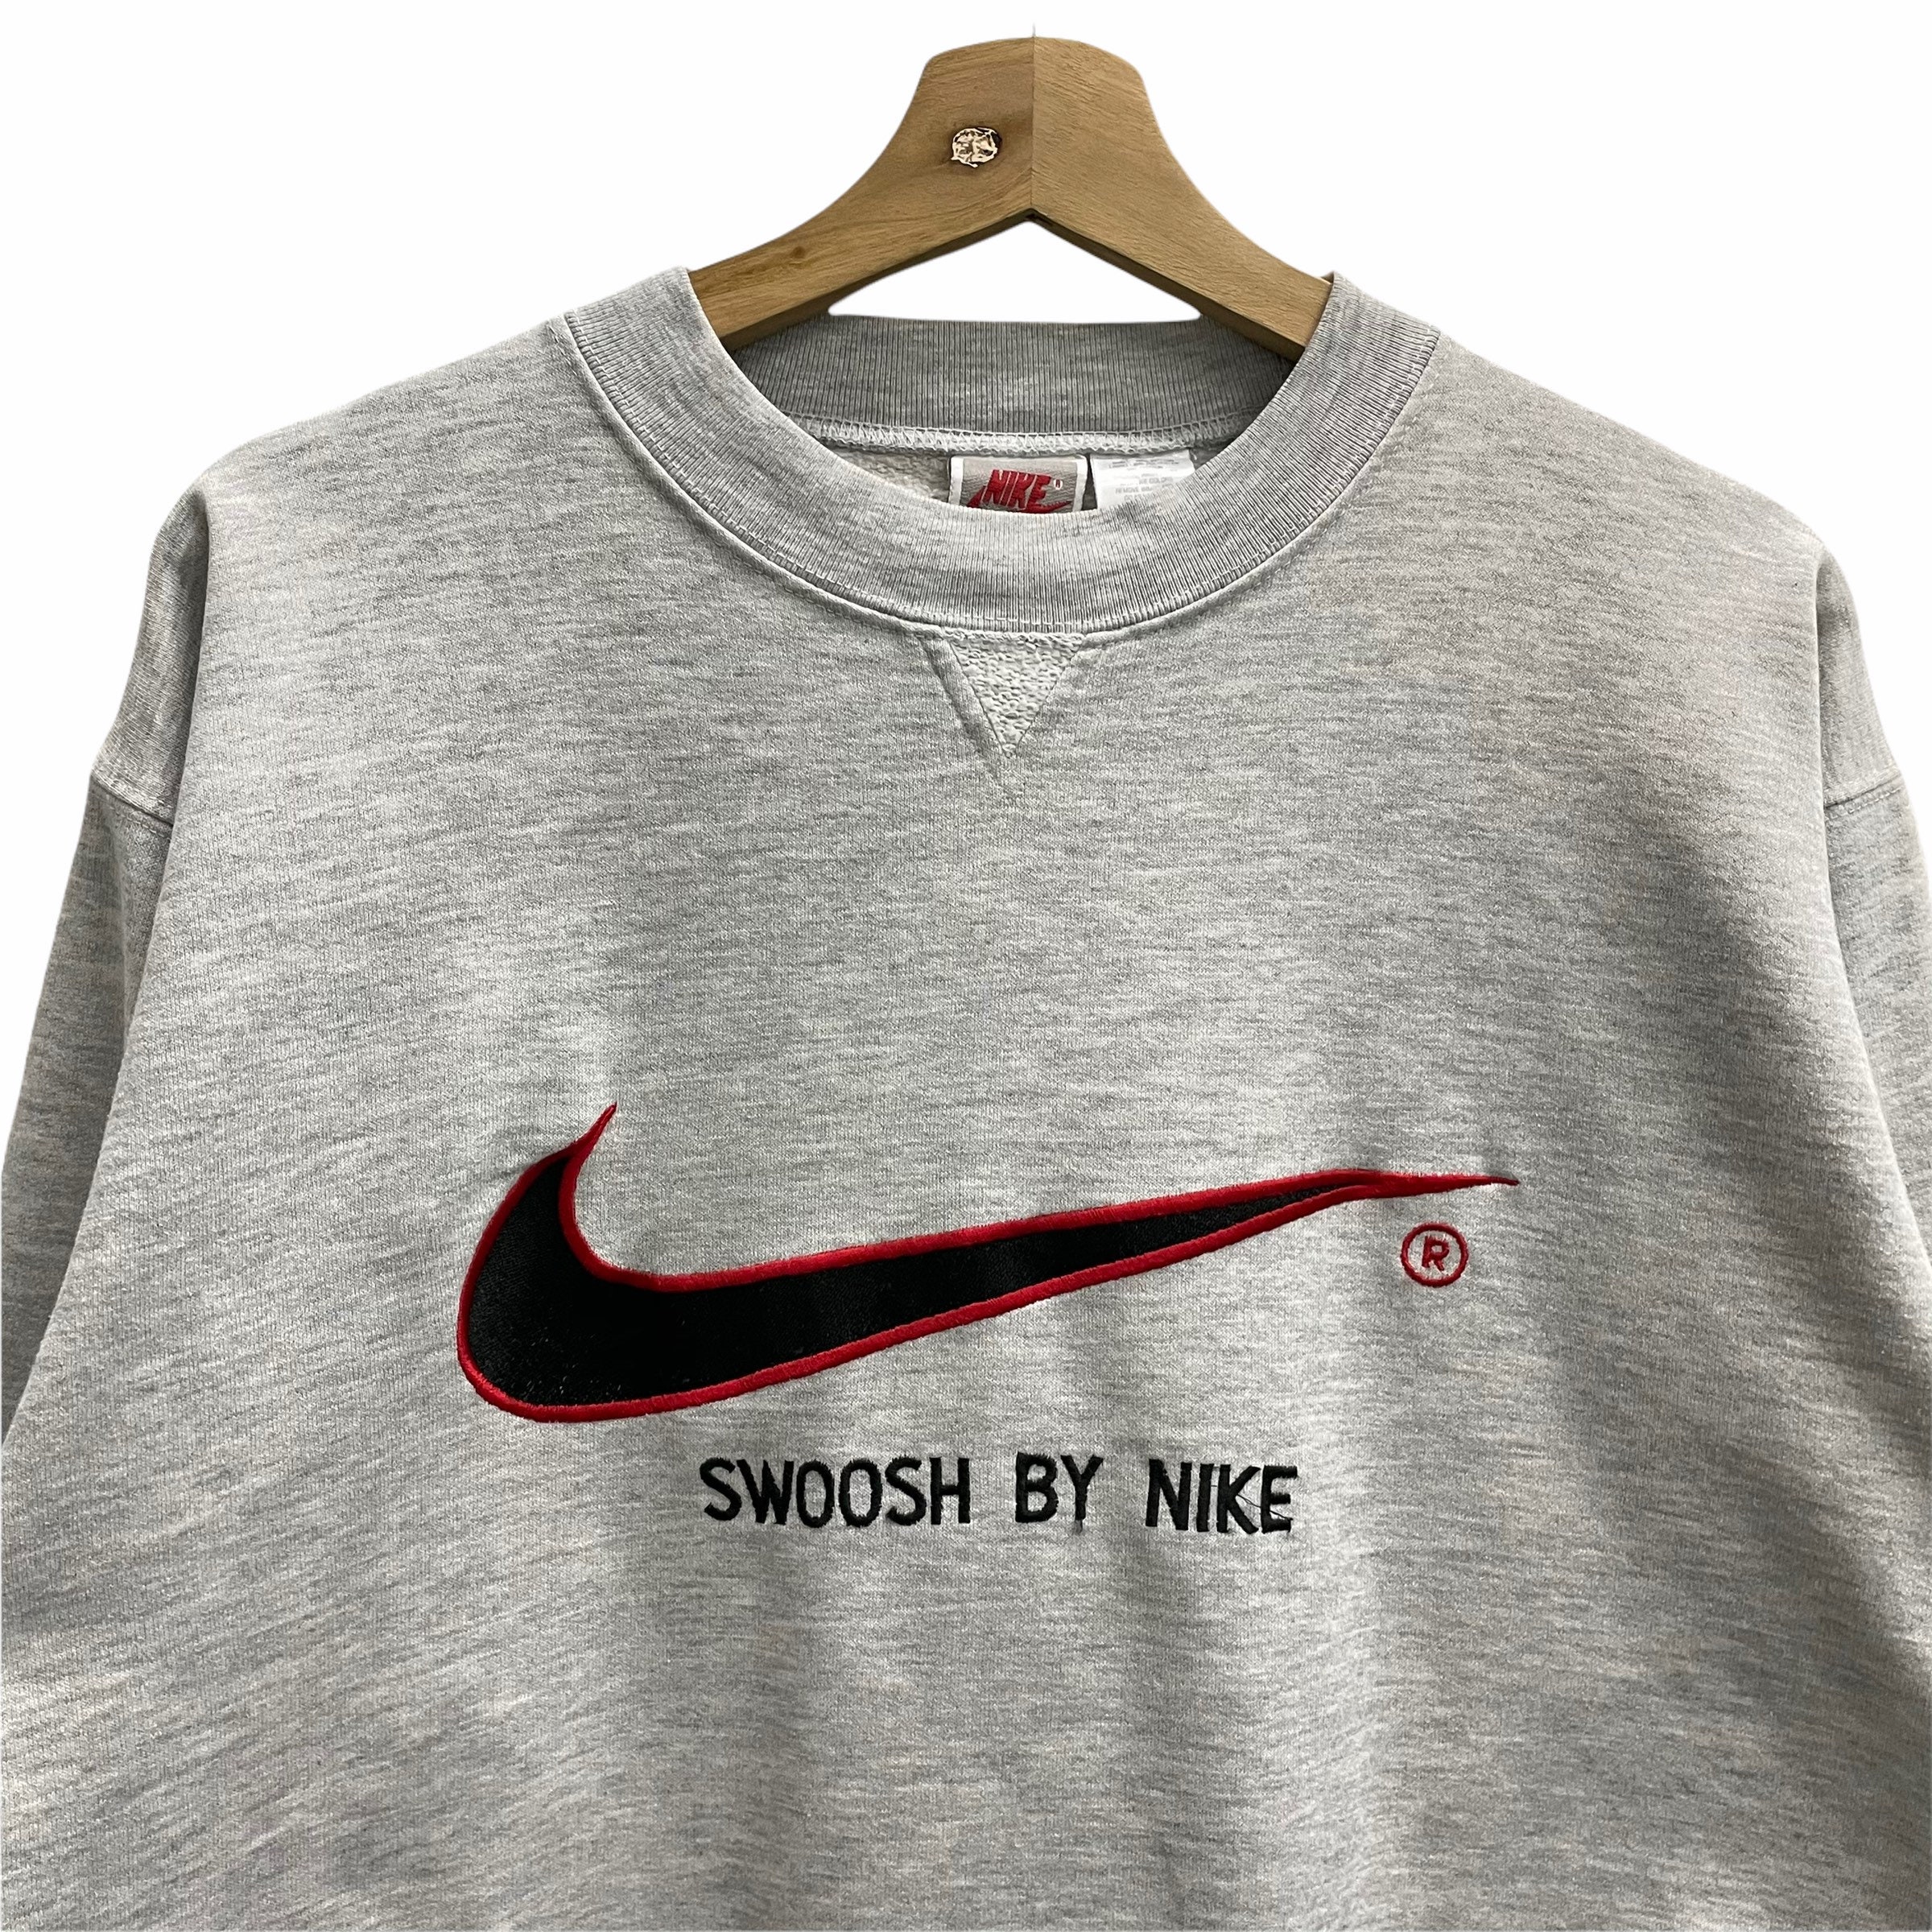 PICK Vintage 90s Nike Swoosh Sweater Pullover Swoosh Nike Crewneck